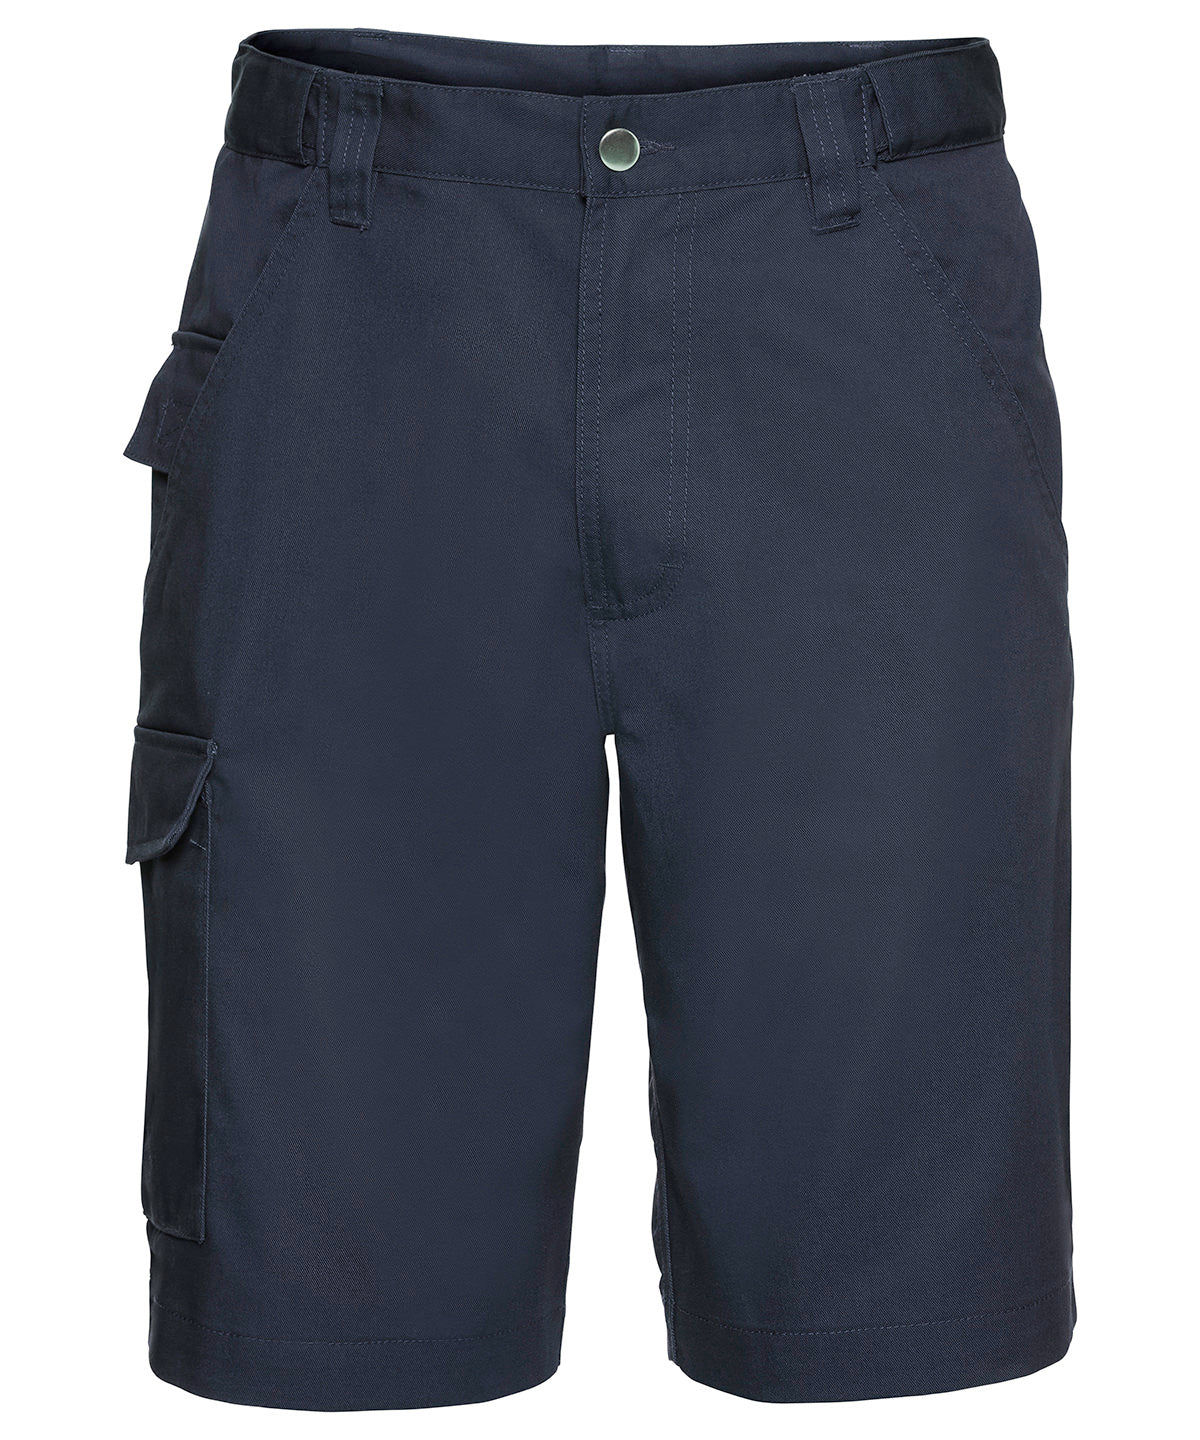 Stuttbuxur - Polycotton Twill Workwear Shorts